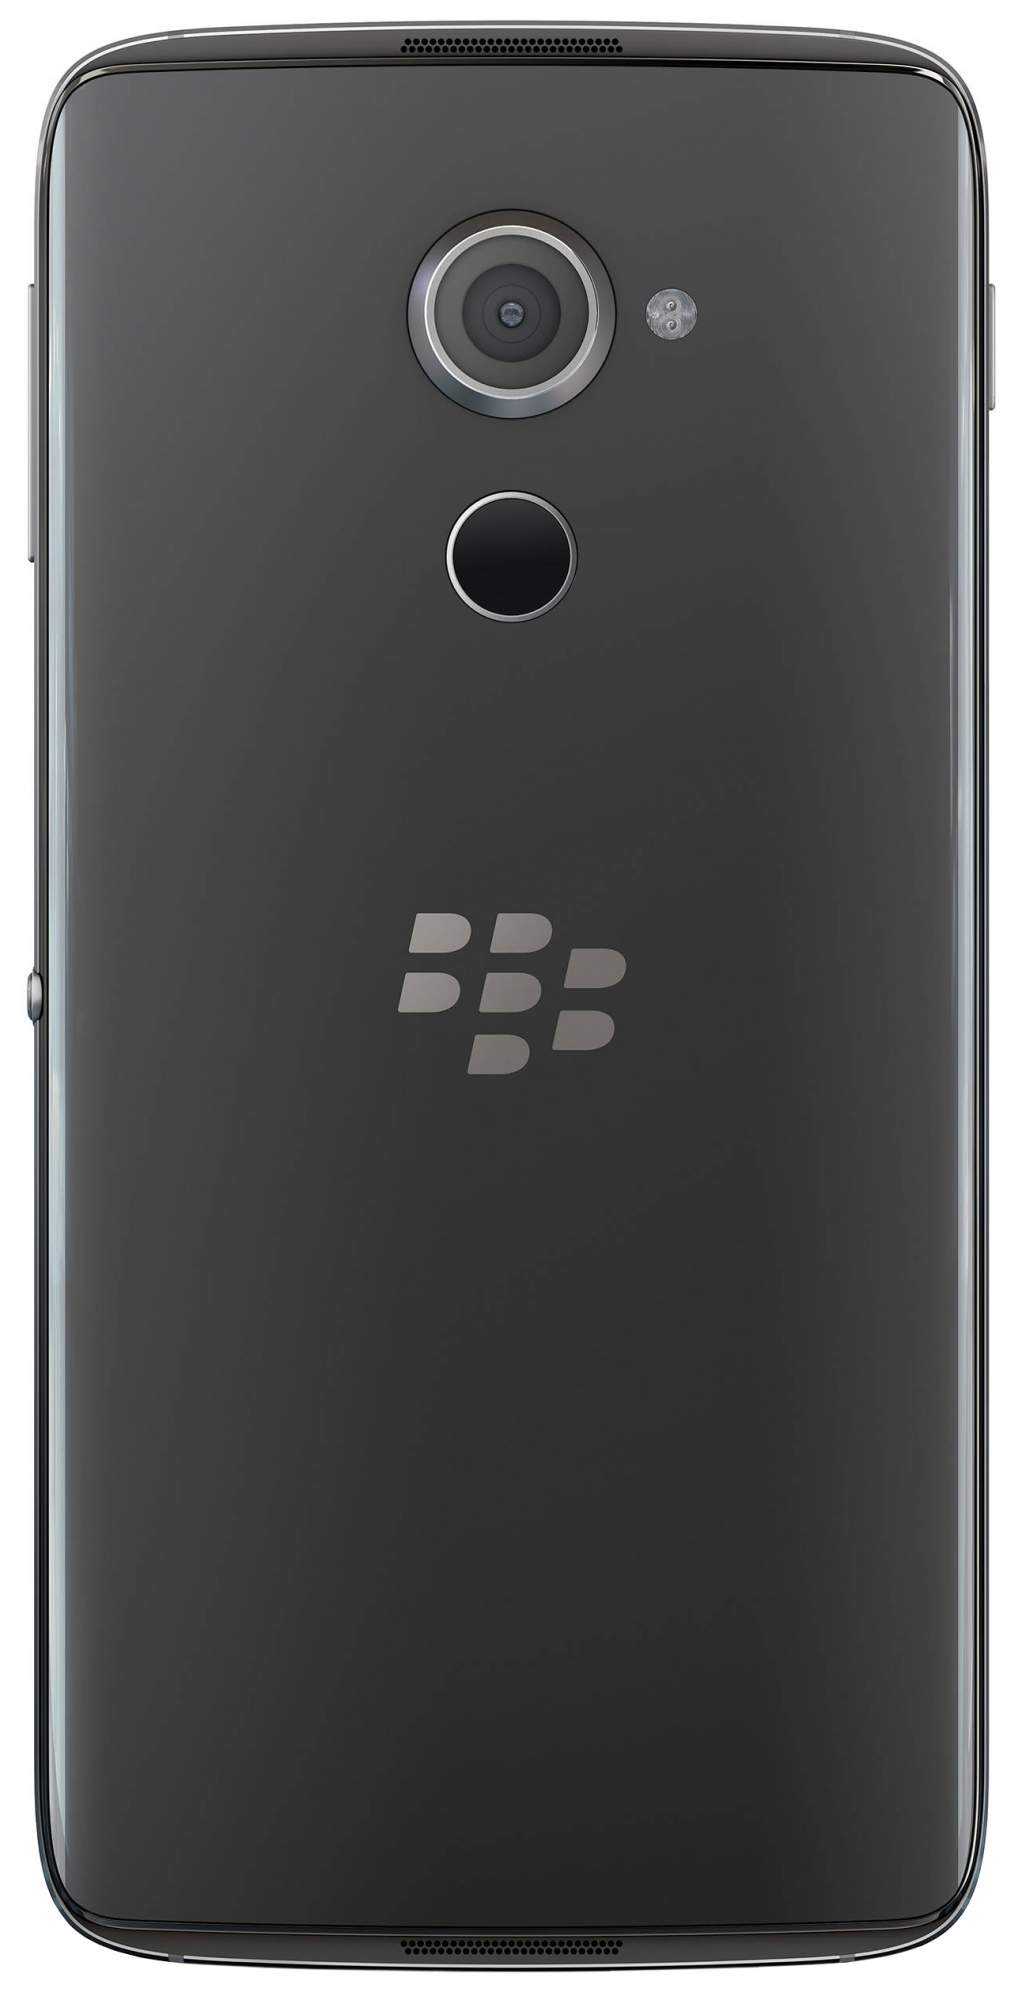 Blackberry dtek60 - санкт-петербург